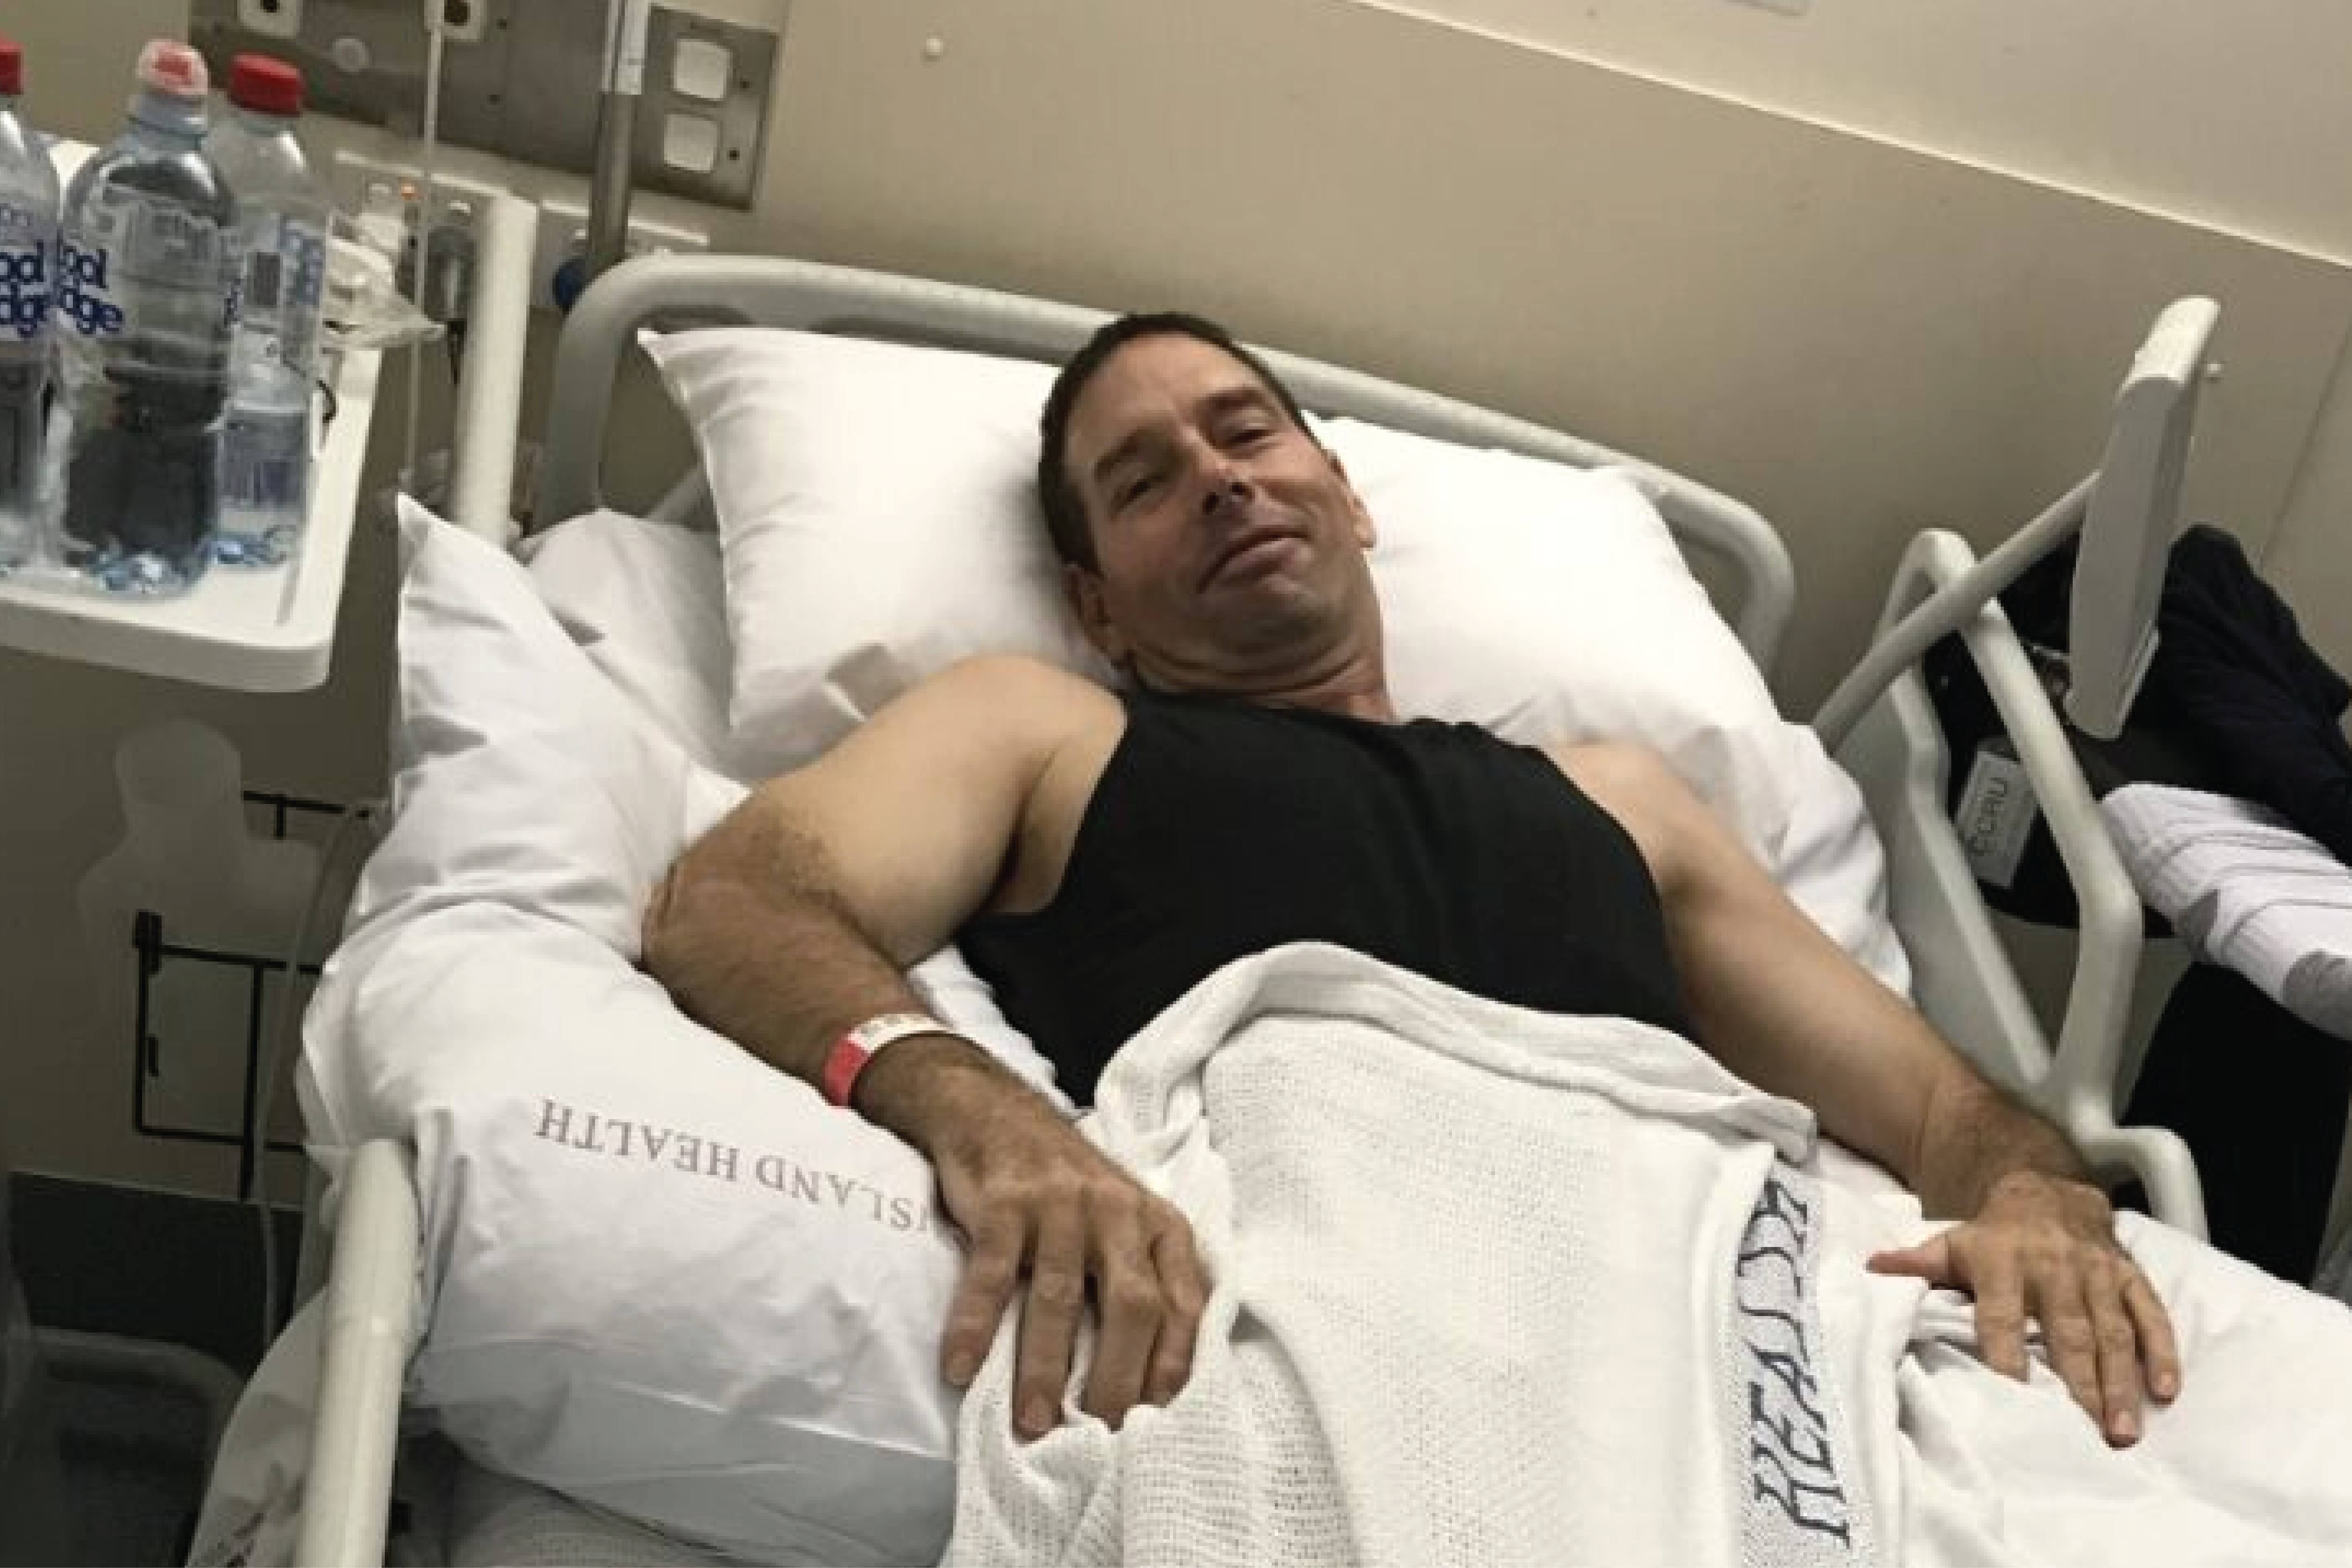 Glenn lying in a hospital bed